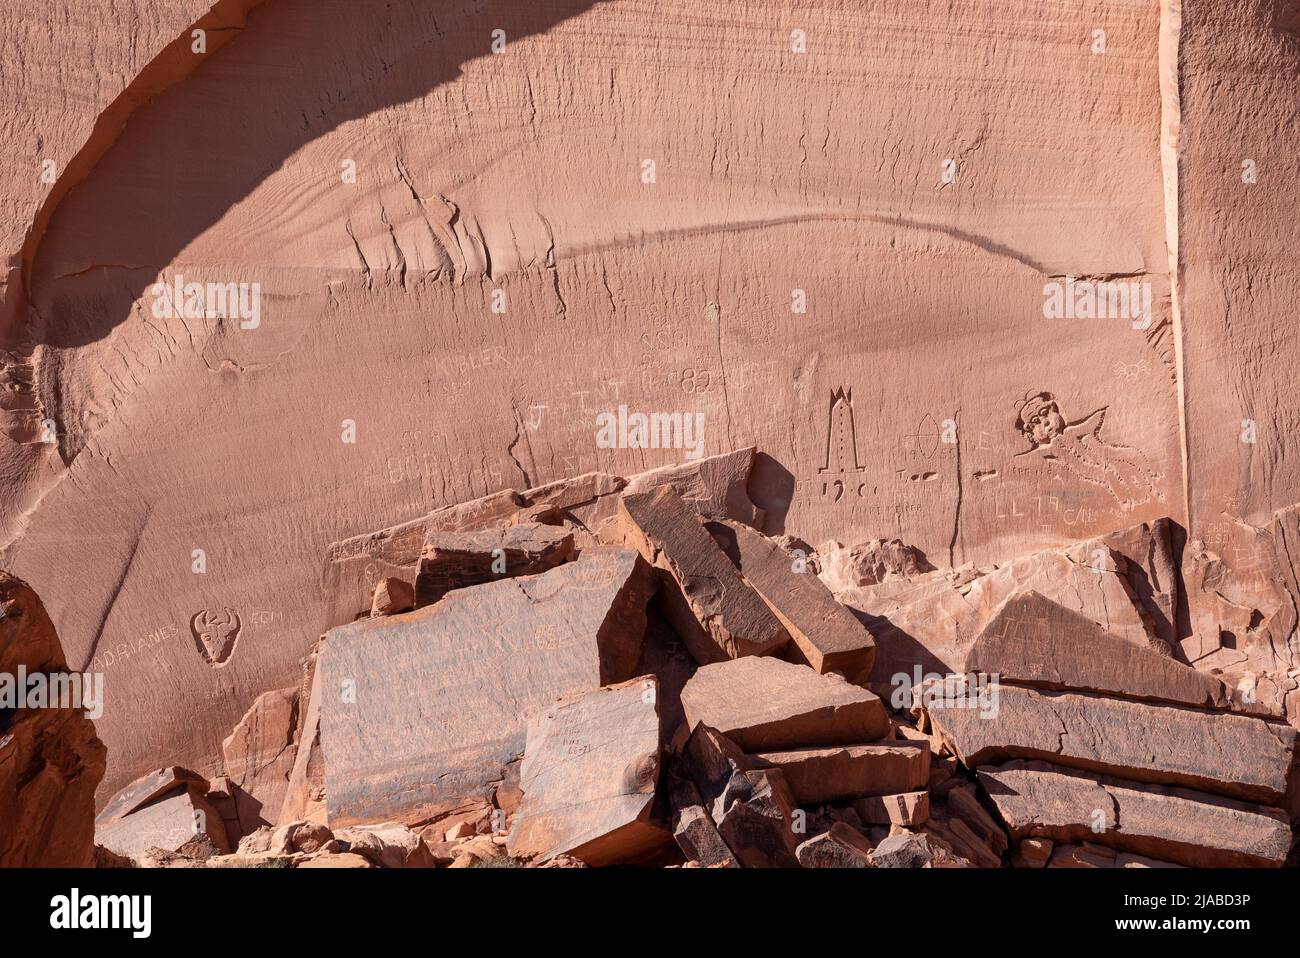 Inscriptions on canyon wall, Labyrinth Canyon, Utah. Stock Photo